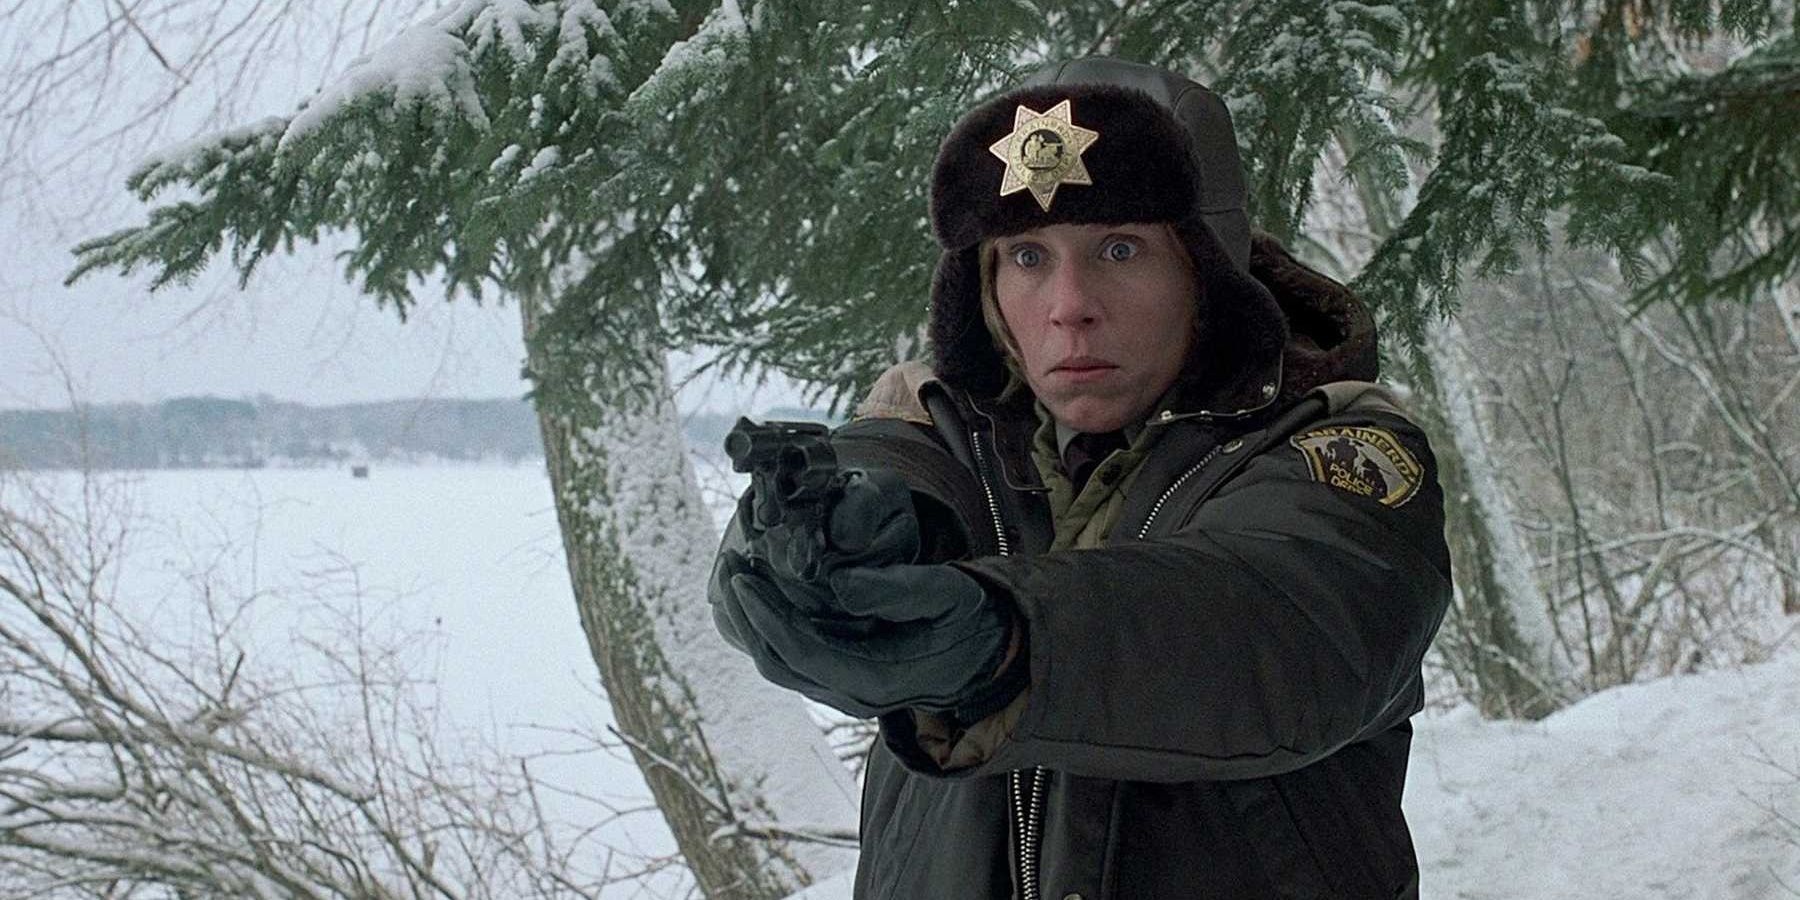 Francis McDormand aims her gin in a snowy field in Fargo.